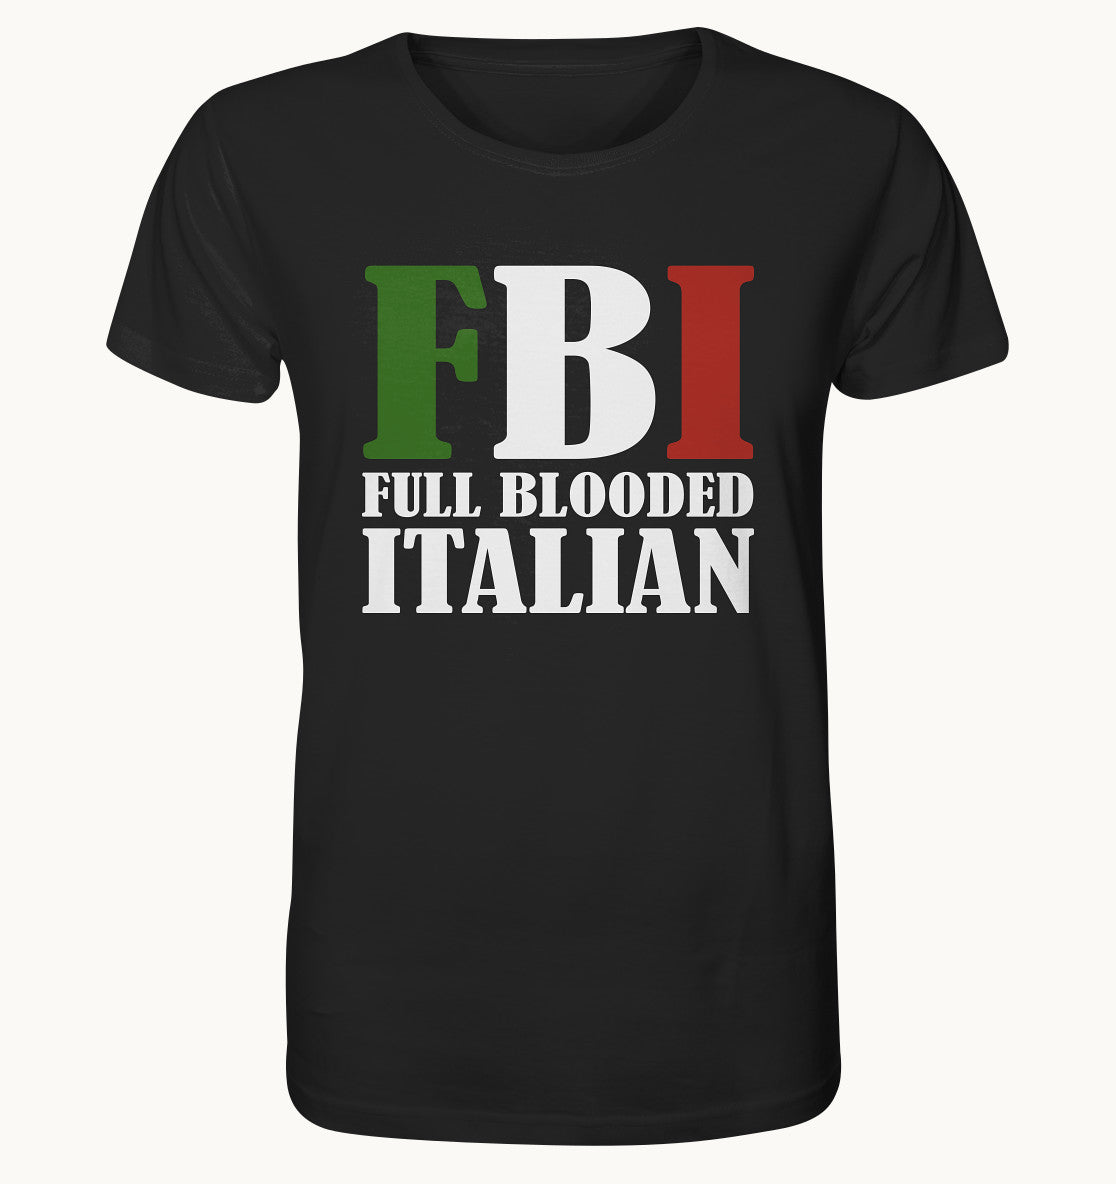 FBI - Full Blooded Italian - Organic Shirt